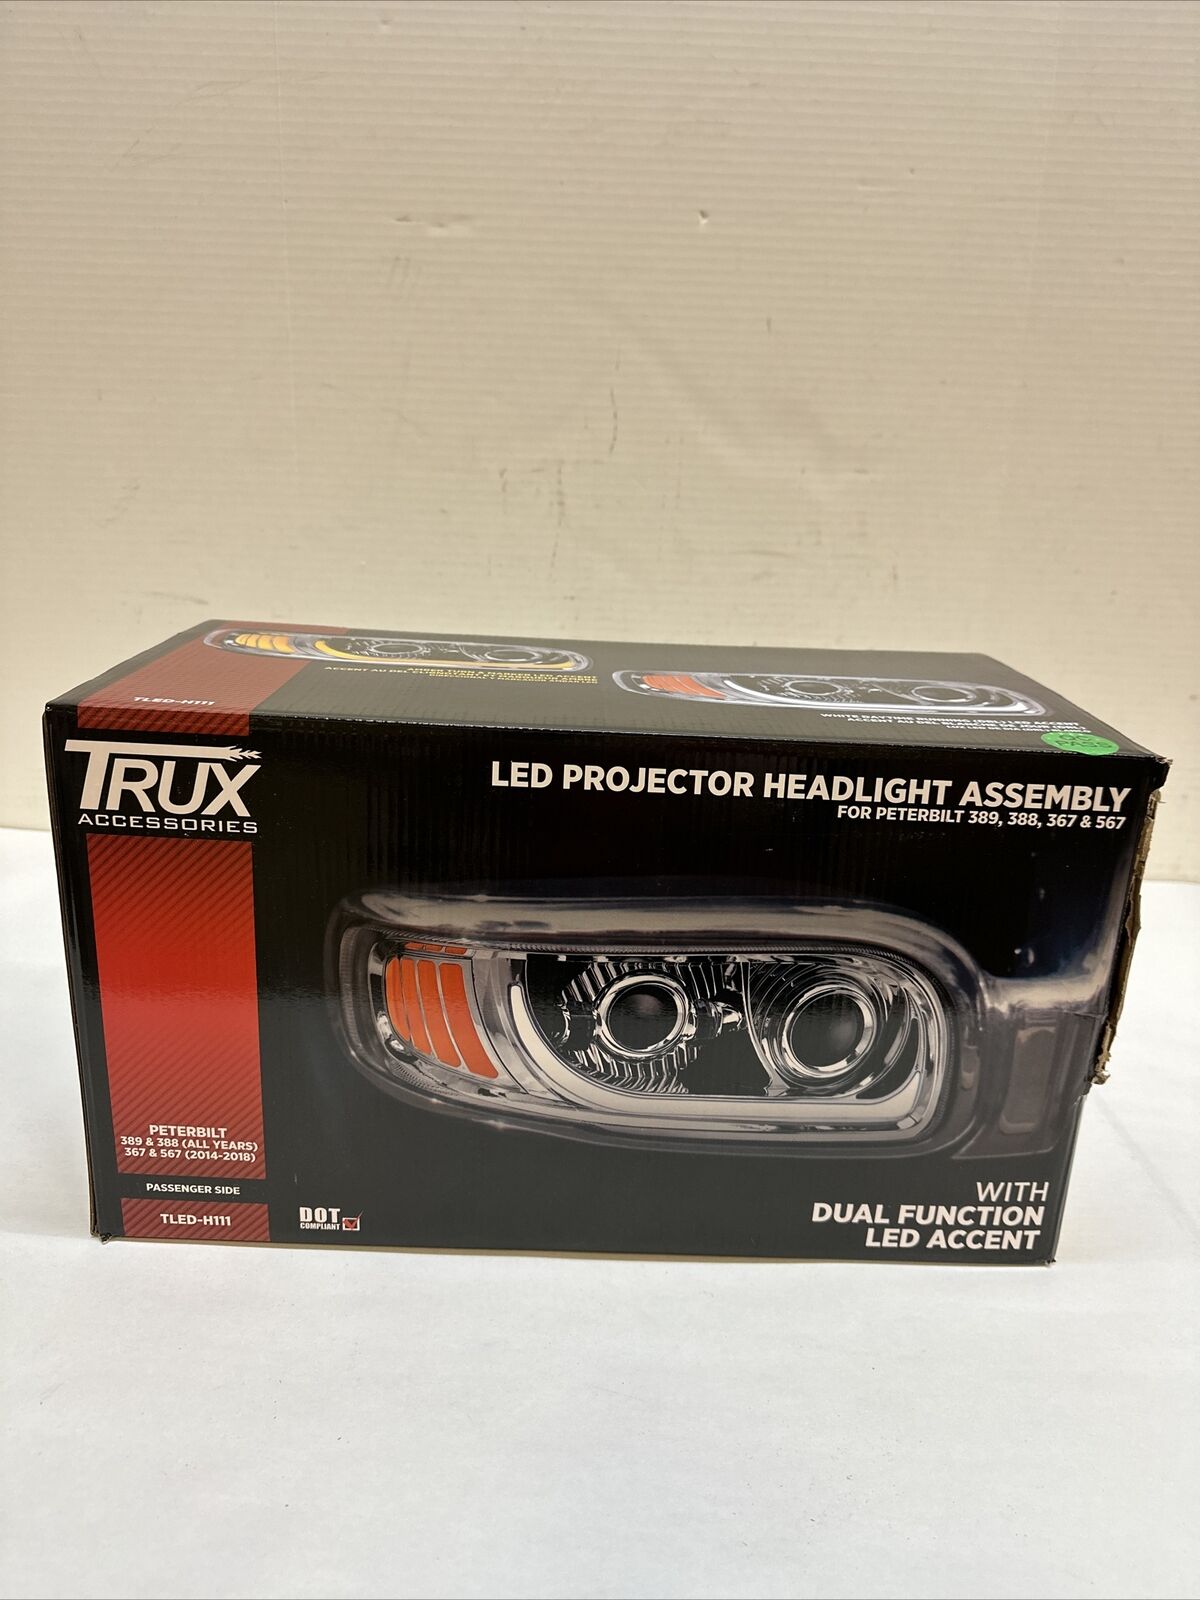 Trux TLED-H111 Led Projector Headlight Assembly, Chrome, Rh, For Peterbilt 389